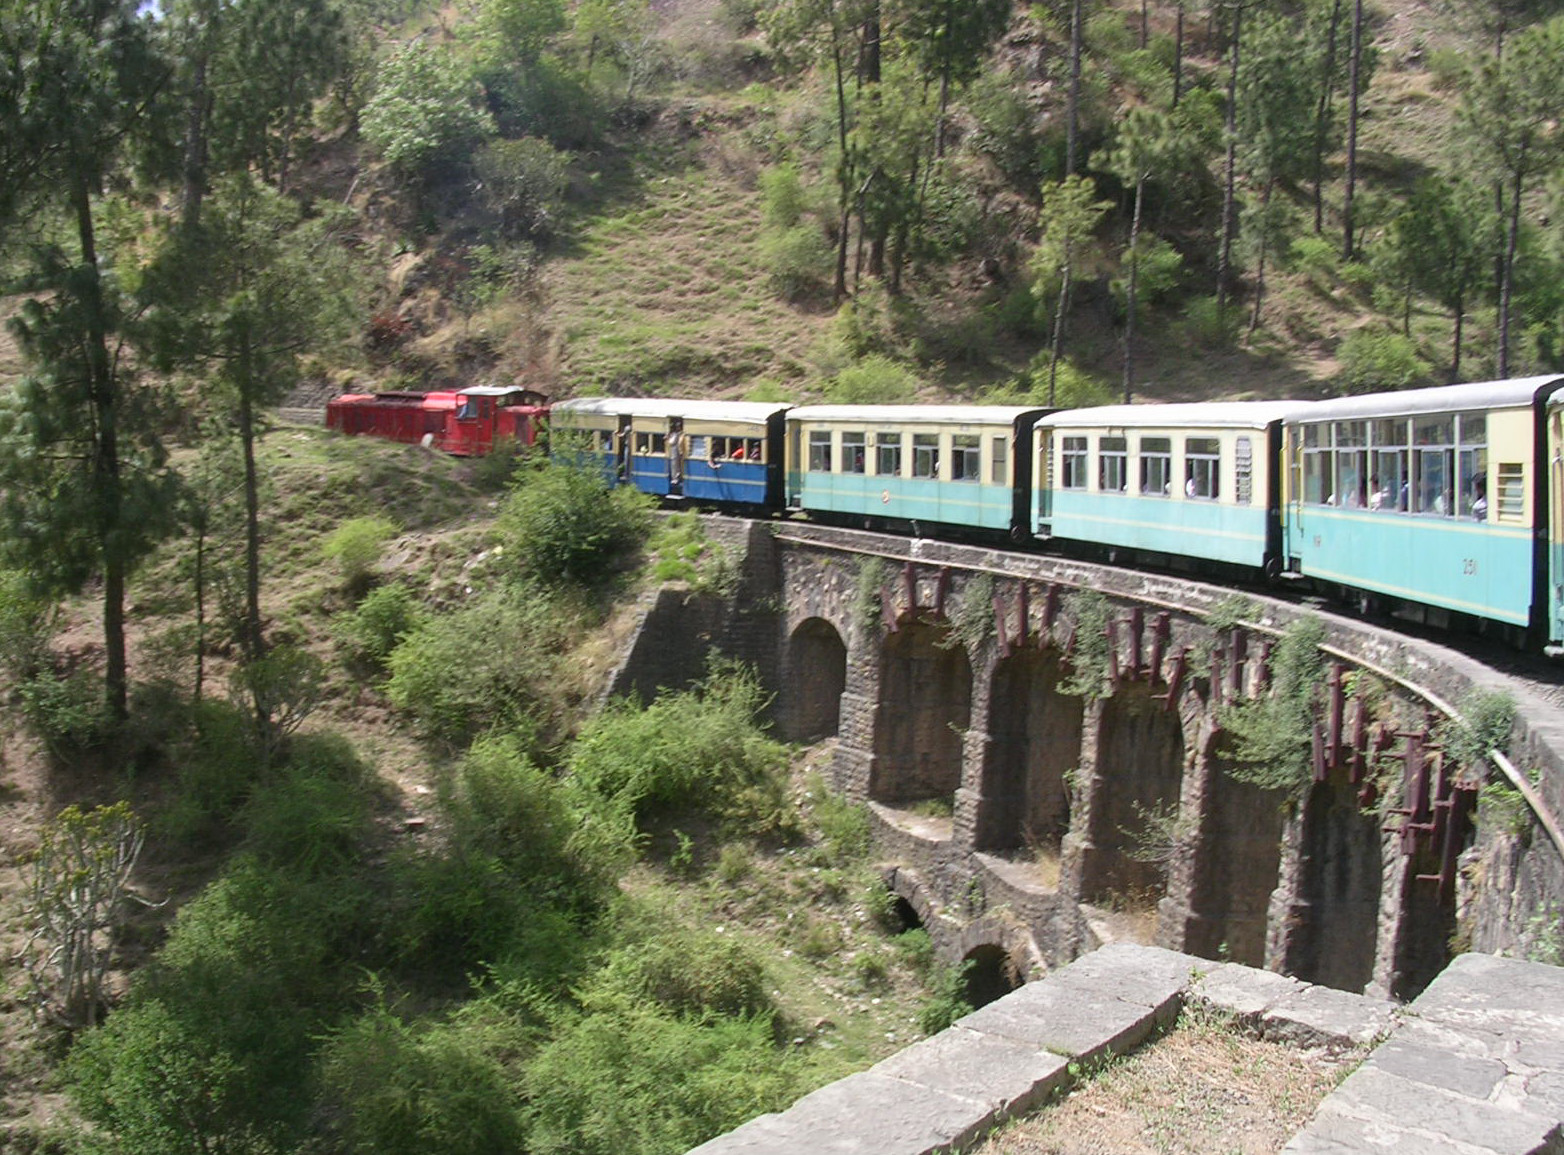 The Toy Train to Shimla